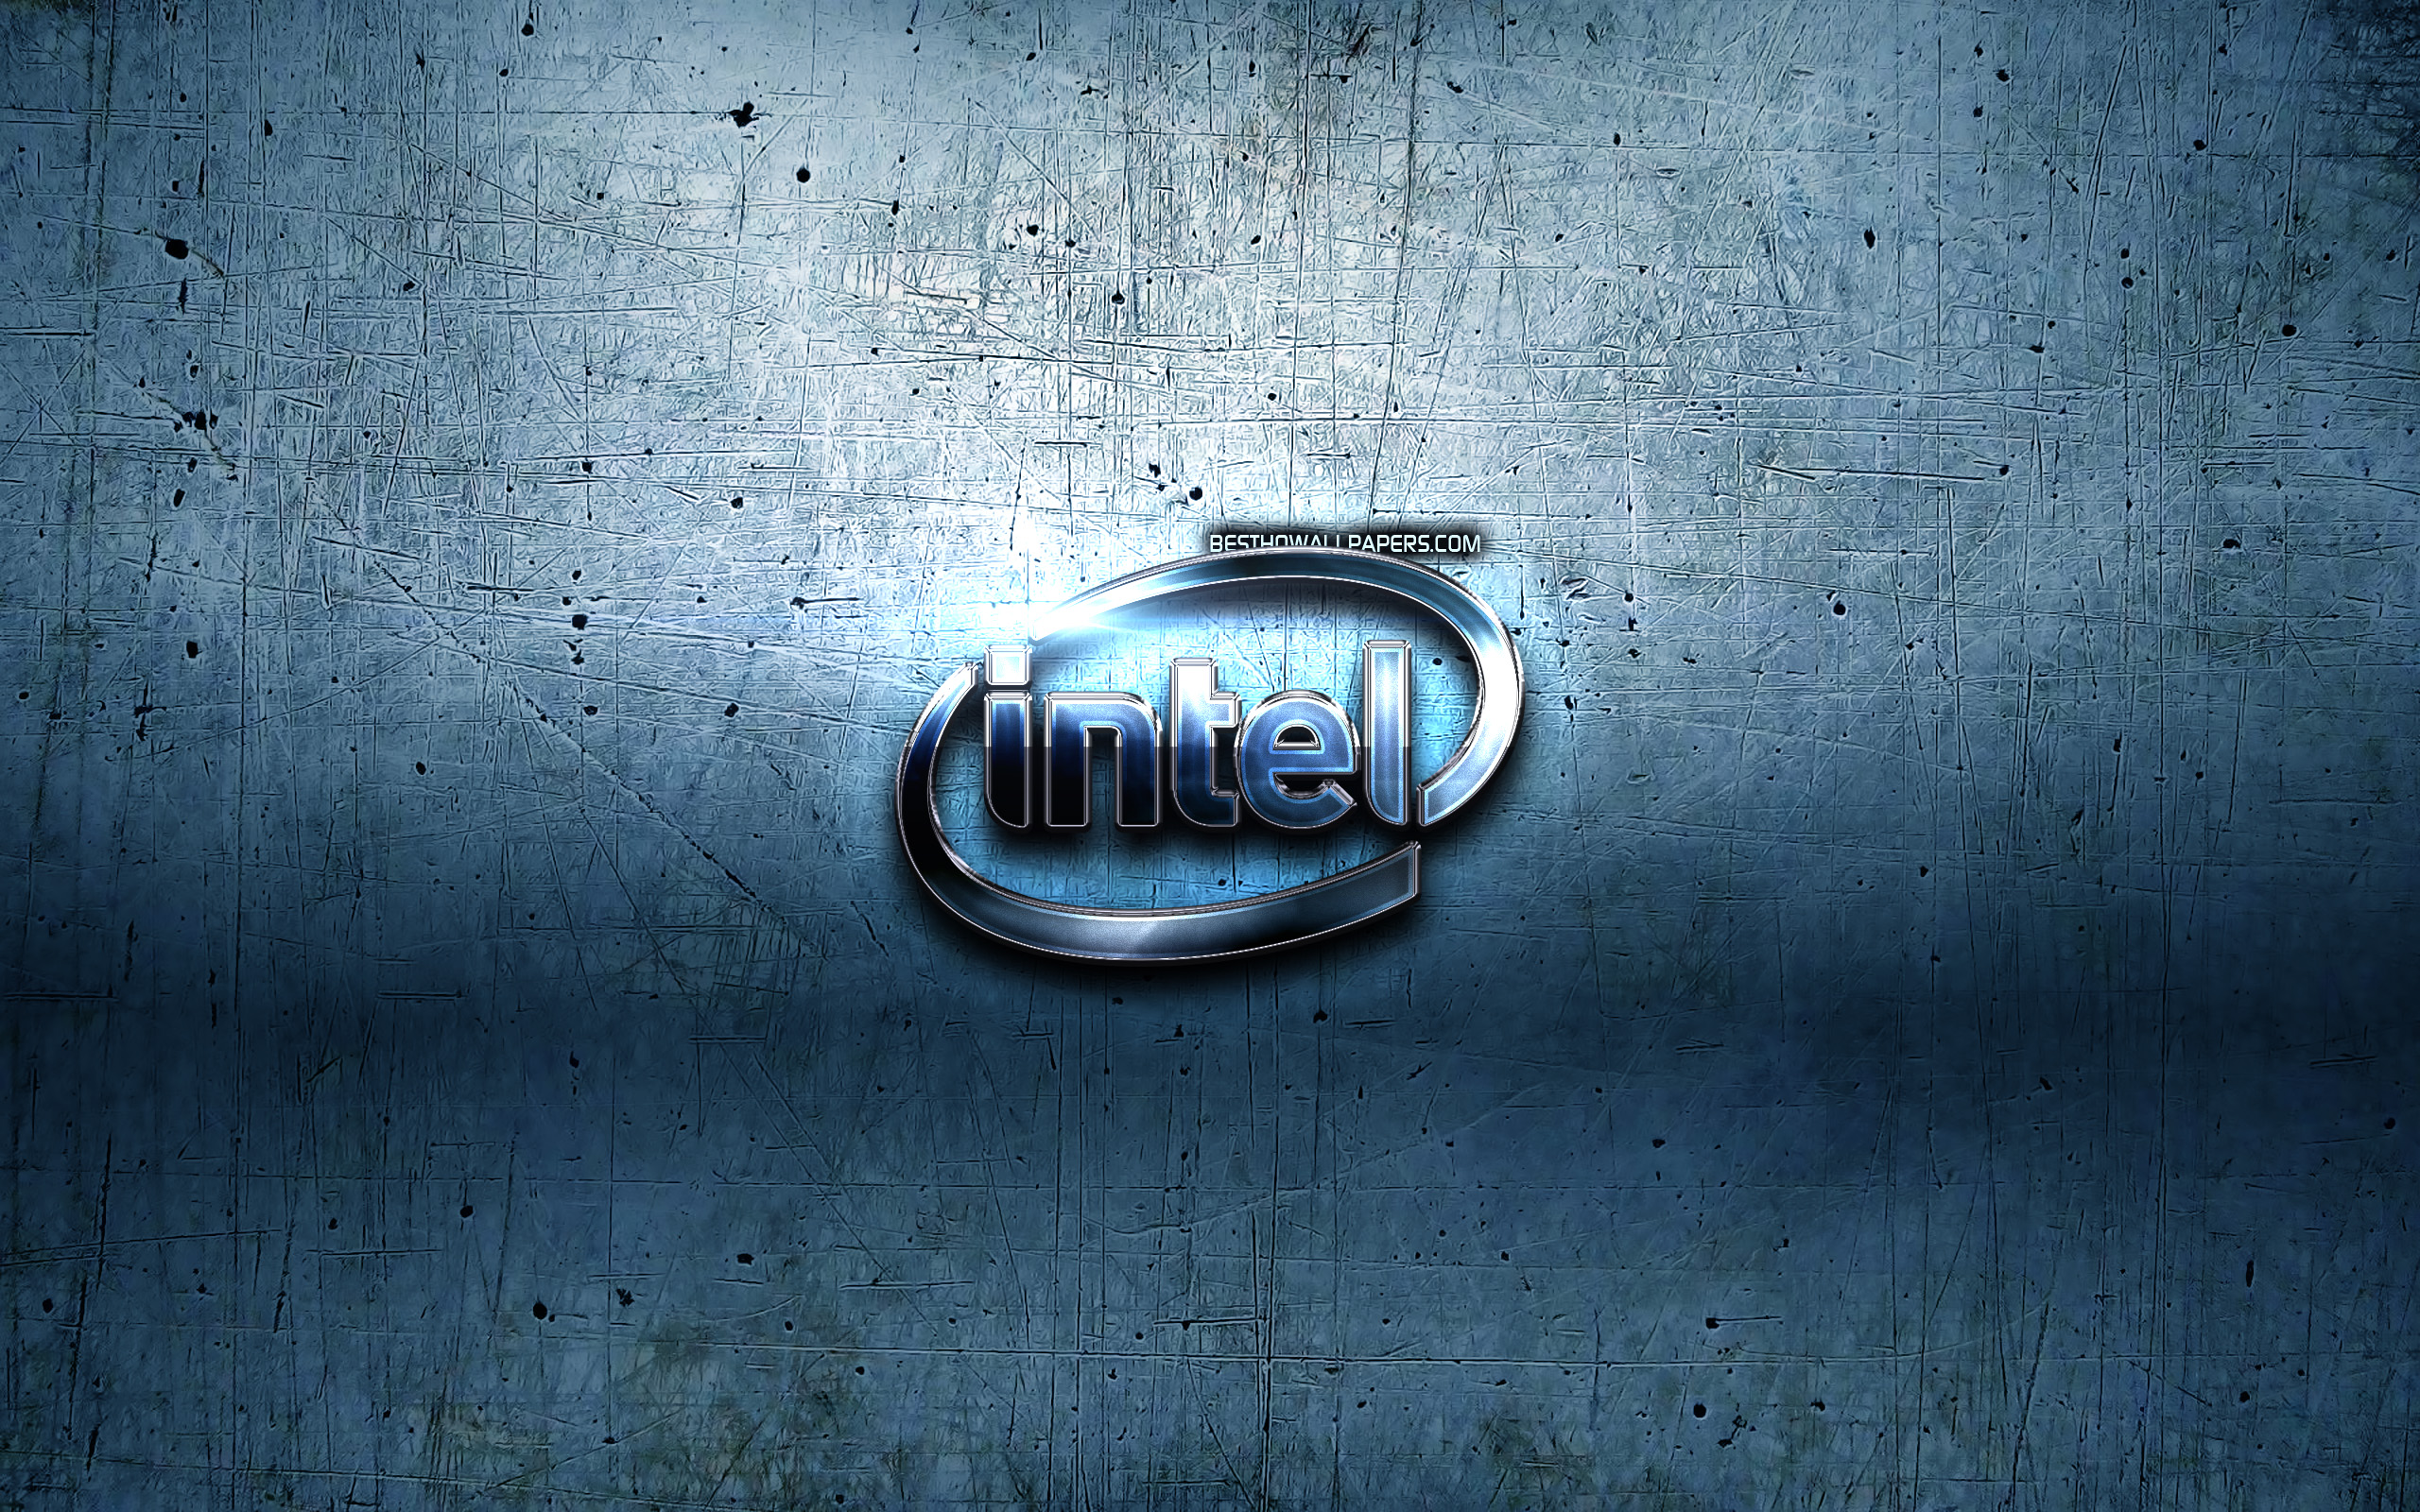 Download wallpaper Intel logo, 4k, blue metal background, grunge art, Intel, brands, creative, Intel 3D logo, artwork, Intel blue logo for desktop with resolution 2560x1600. High Quality HD picture wallpaper